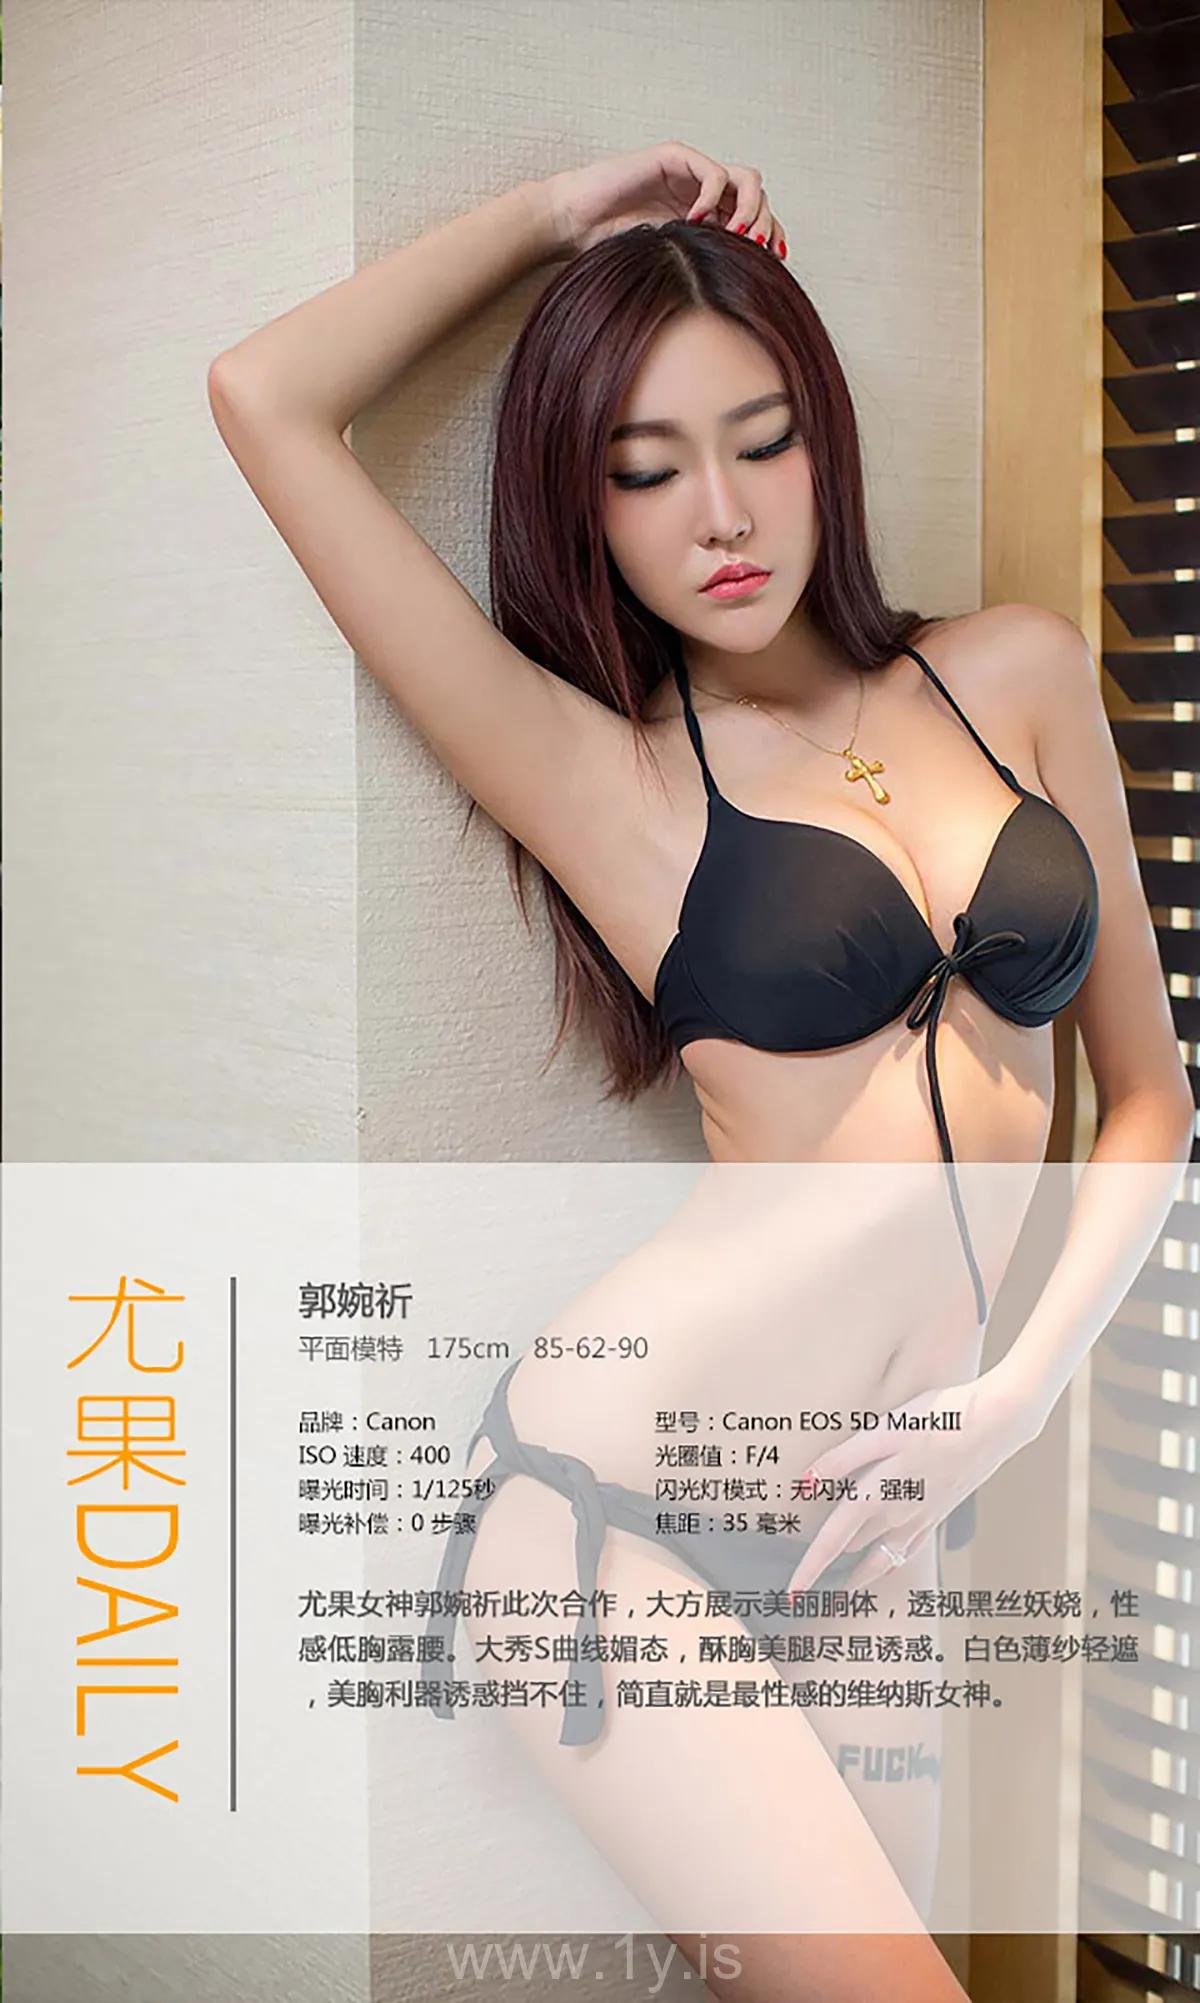 UGIRLS NO.370 Breathtaking & Stylish Chinese Teen 郭婉祁